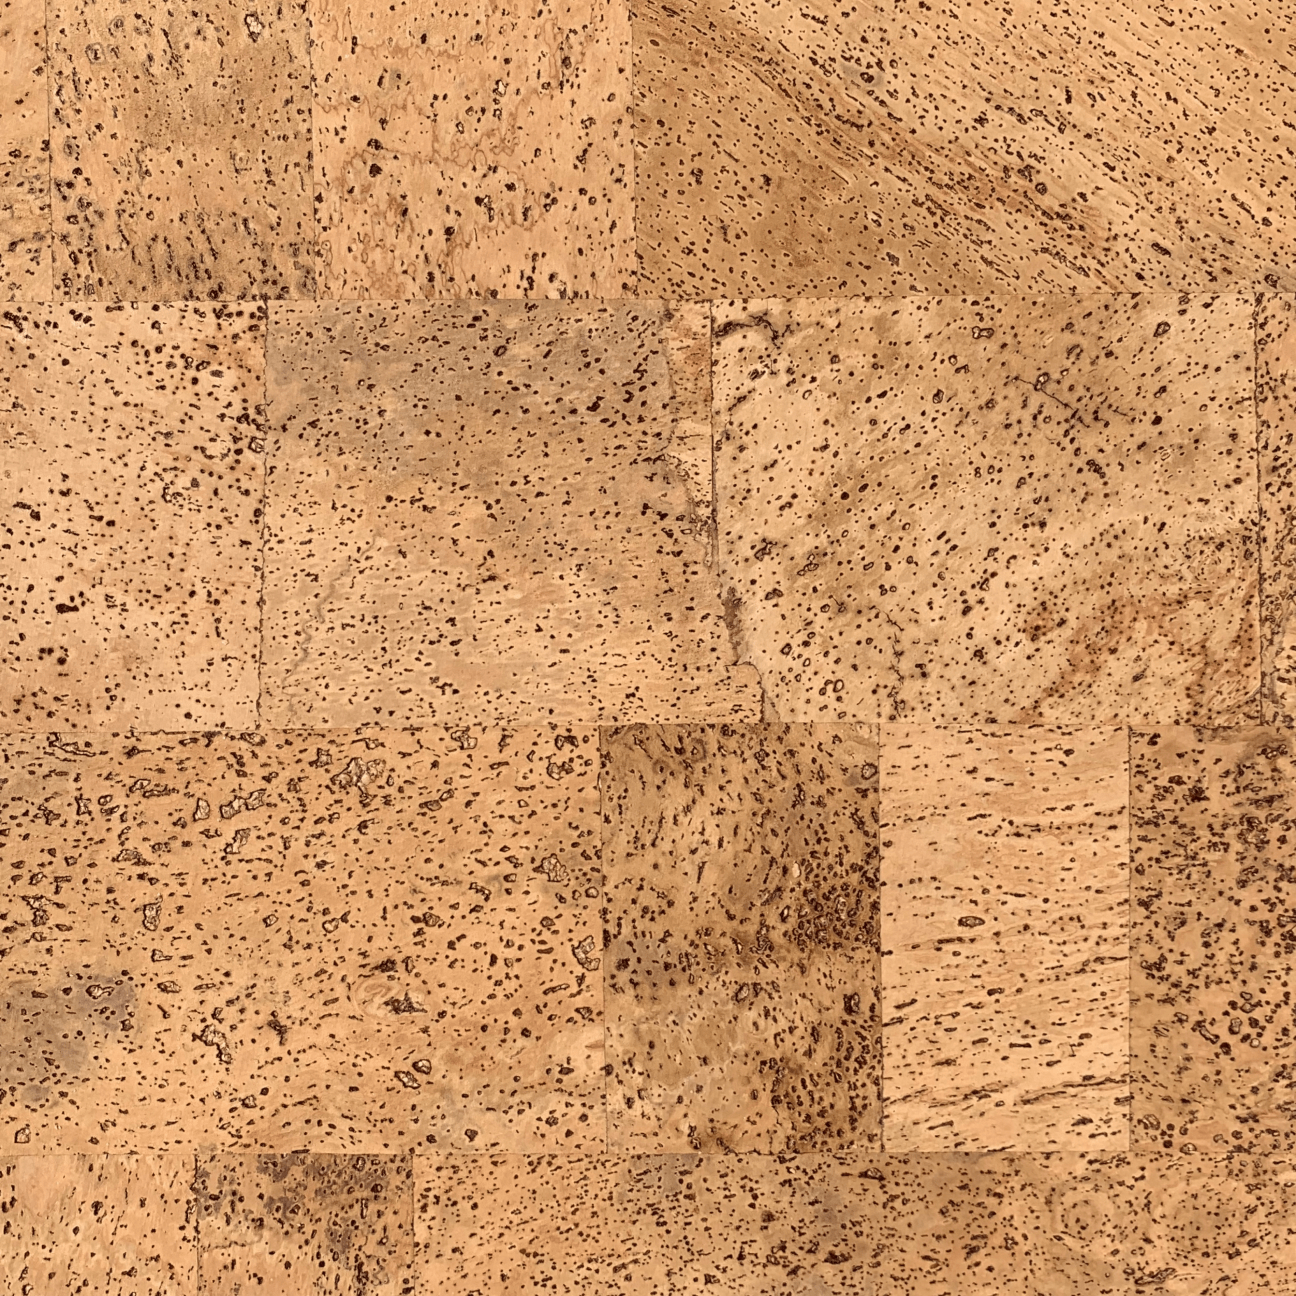 Decorative cork wall tiles MALTA CHESTNUT 3x300x600mm - package 1